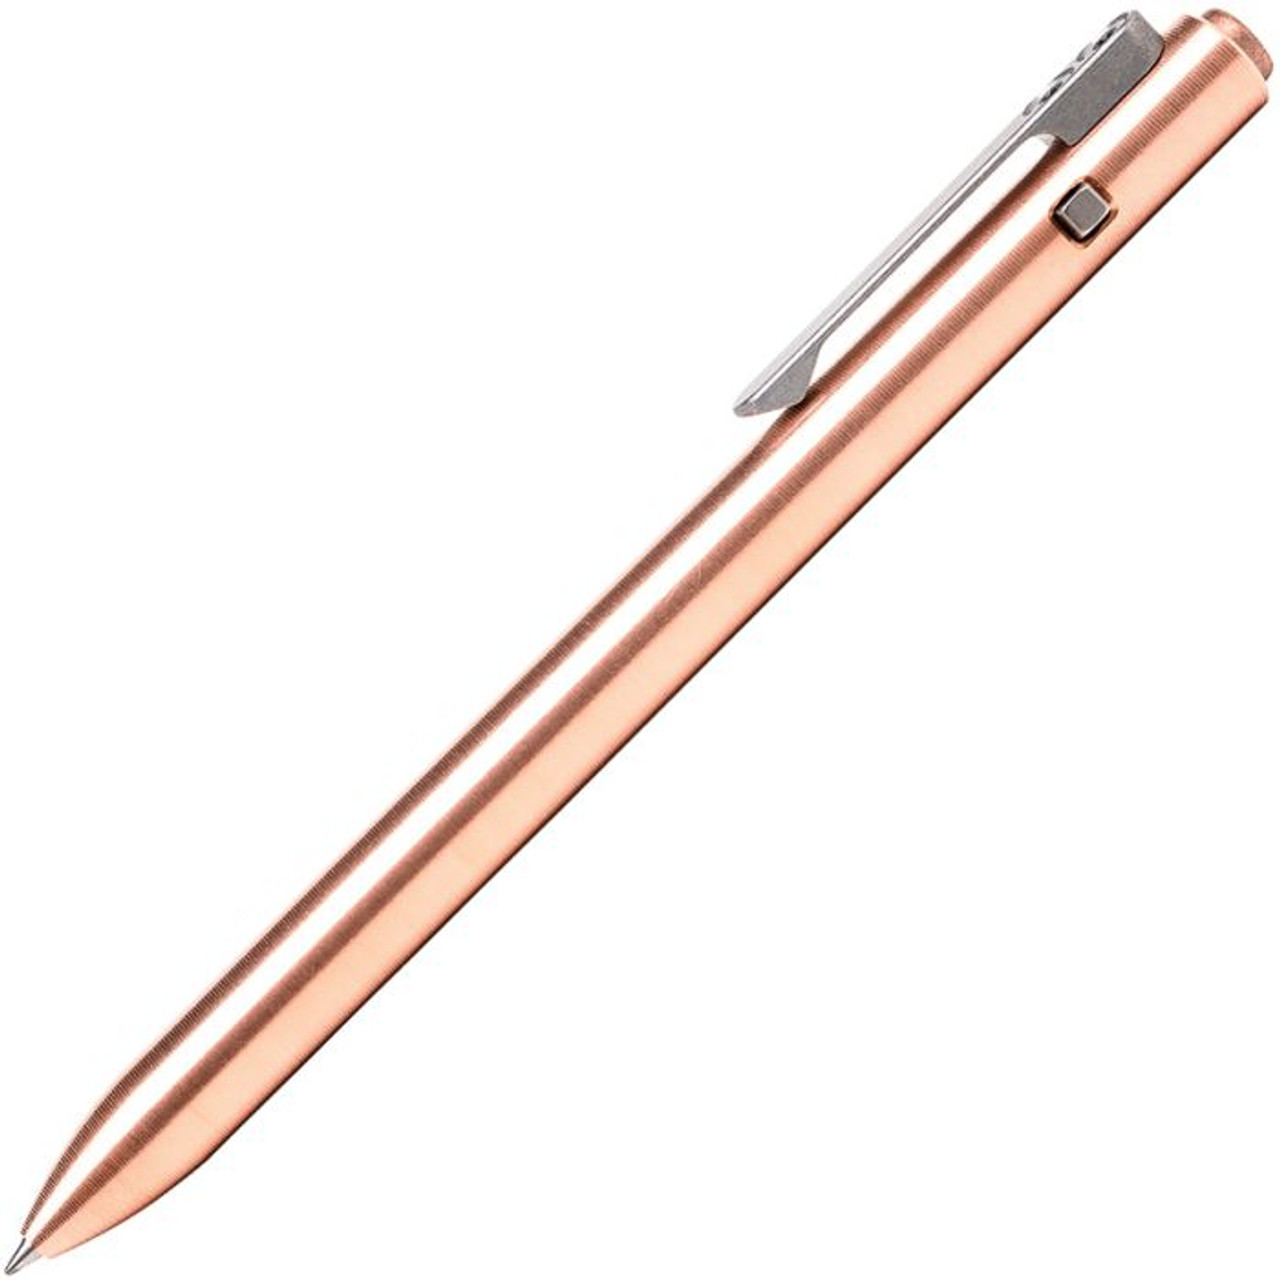 Tactile Turn Standard Side Click Pen (TTRSC1C) Satin Copper Body, Stonewashed Titanium Click Button and Pocket Clip